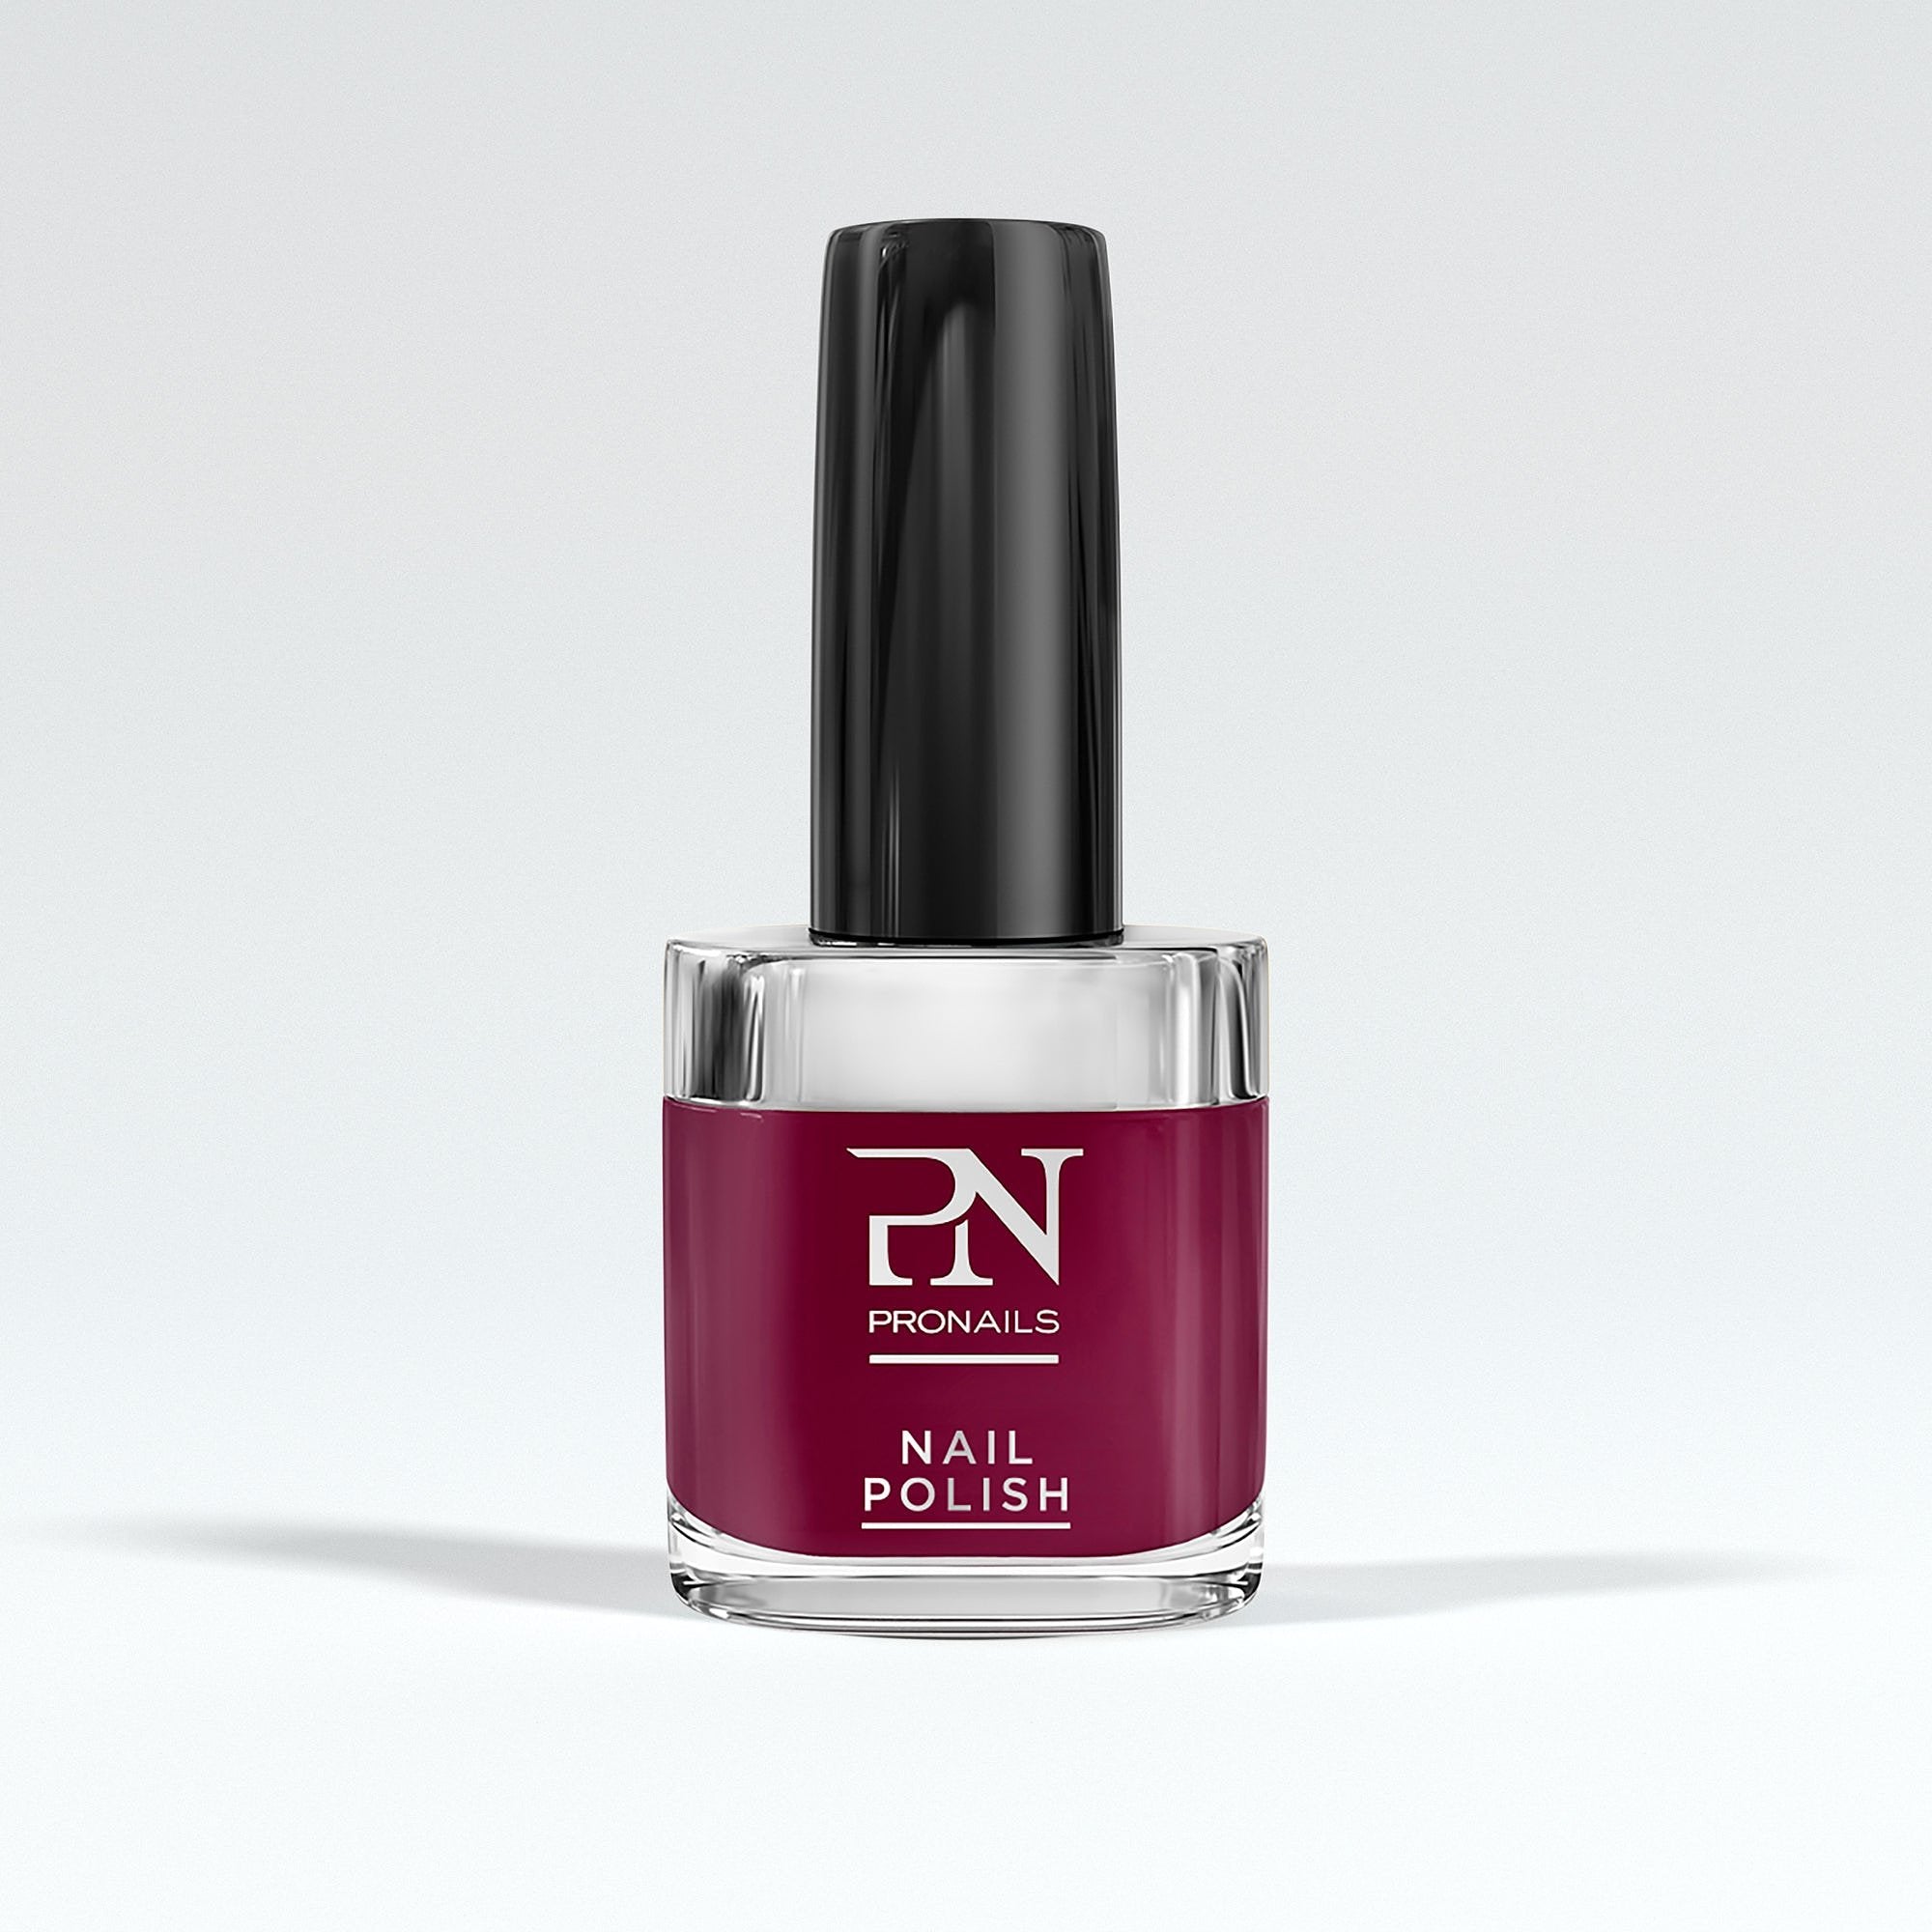 PN SELFCARE Purple nail polish 10ml - Vegan Cruelty Free